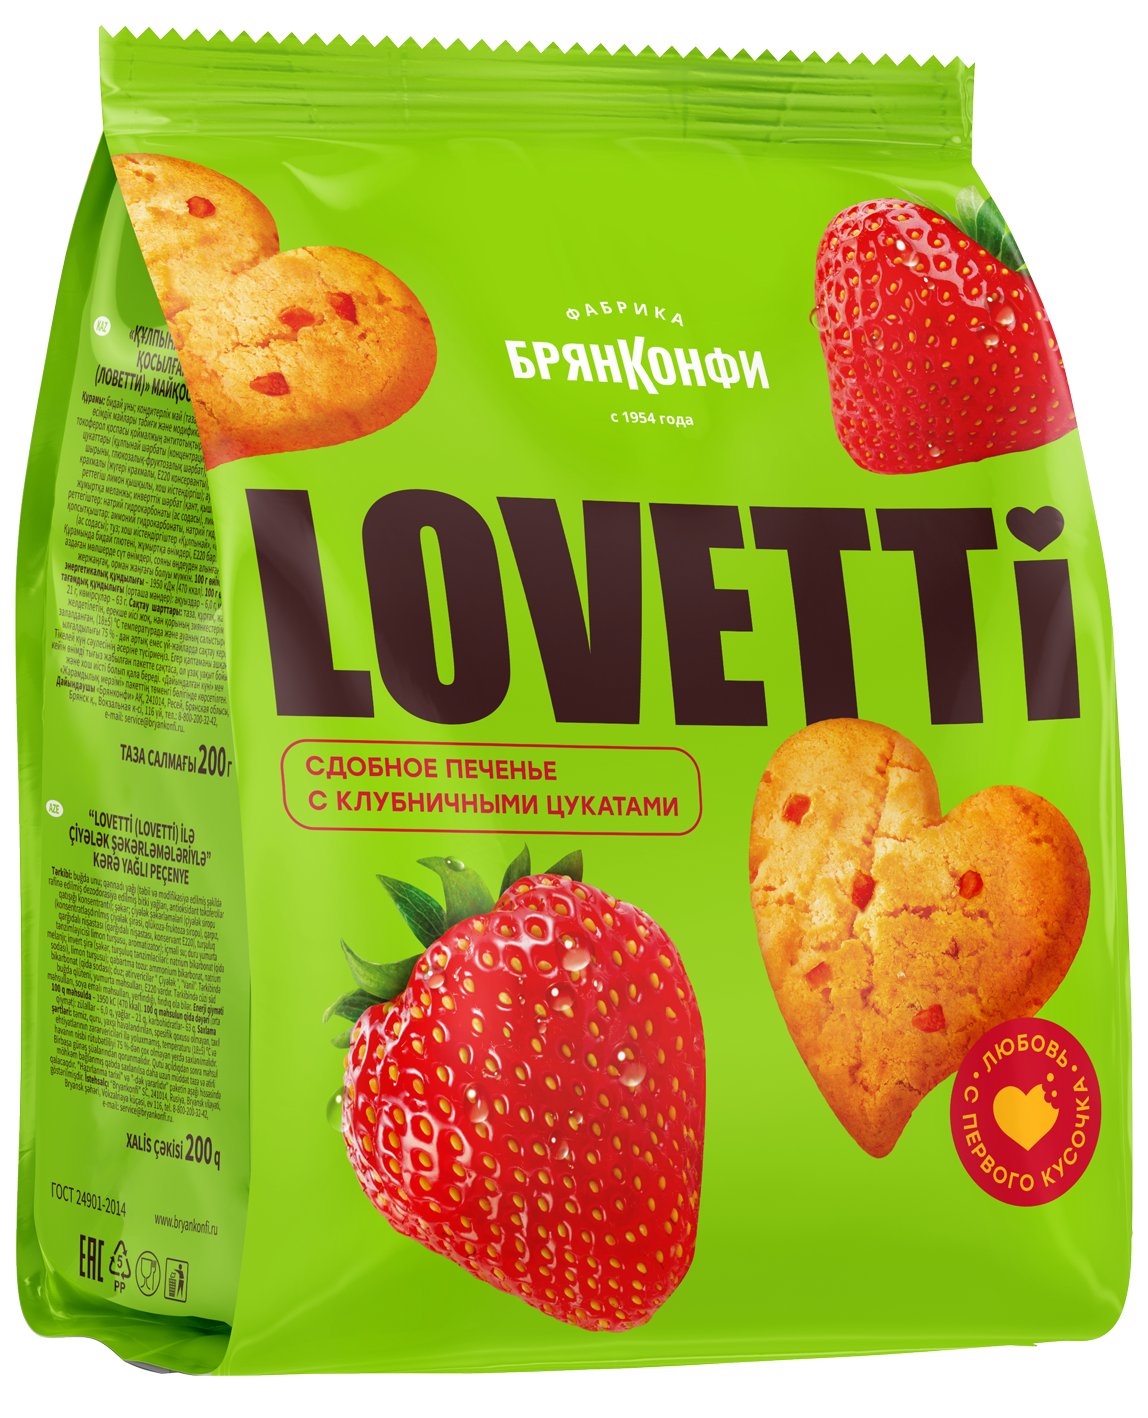 Печенье "Lovetti" с клубничными цукатами 200г/Брянконфи